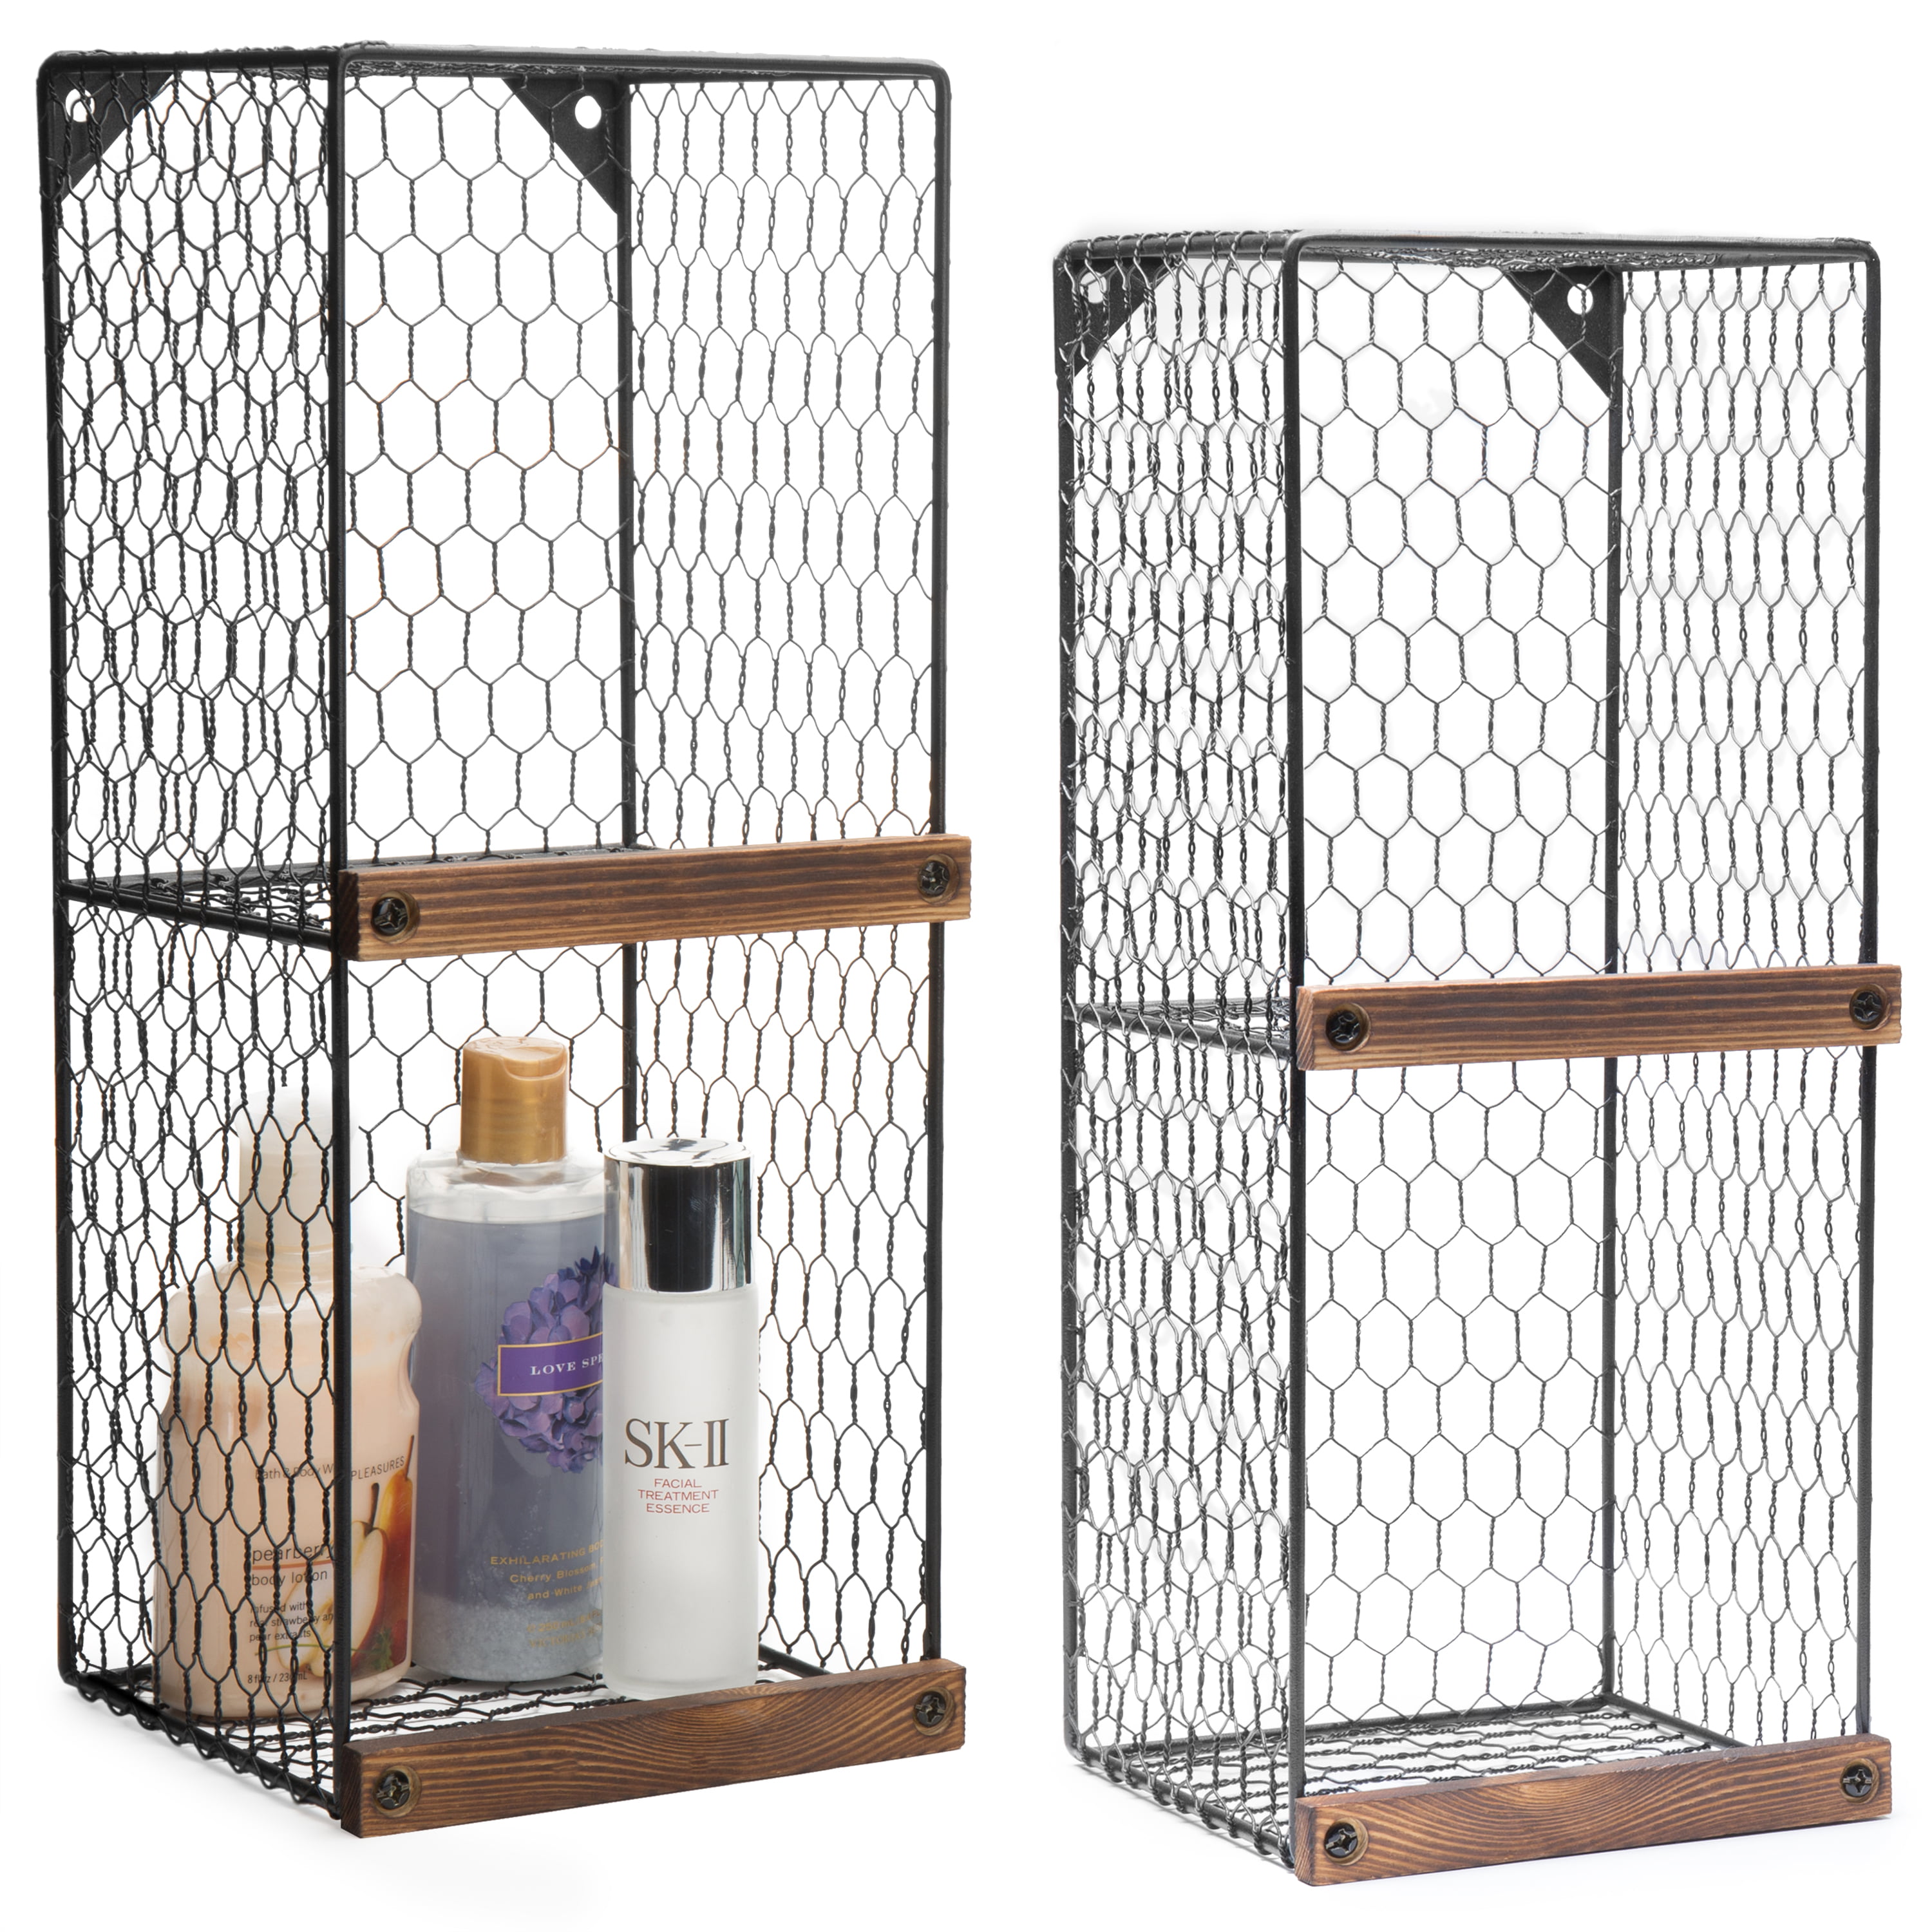 MyGift 3-Tier Rustic Chicken Wire Wall Hanging Bathroom Organizer Shelf Storage Rack